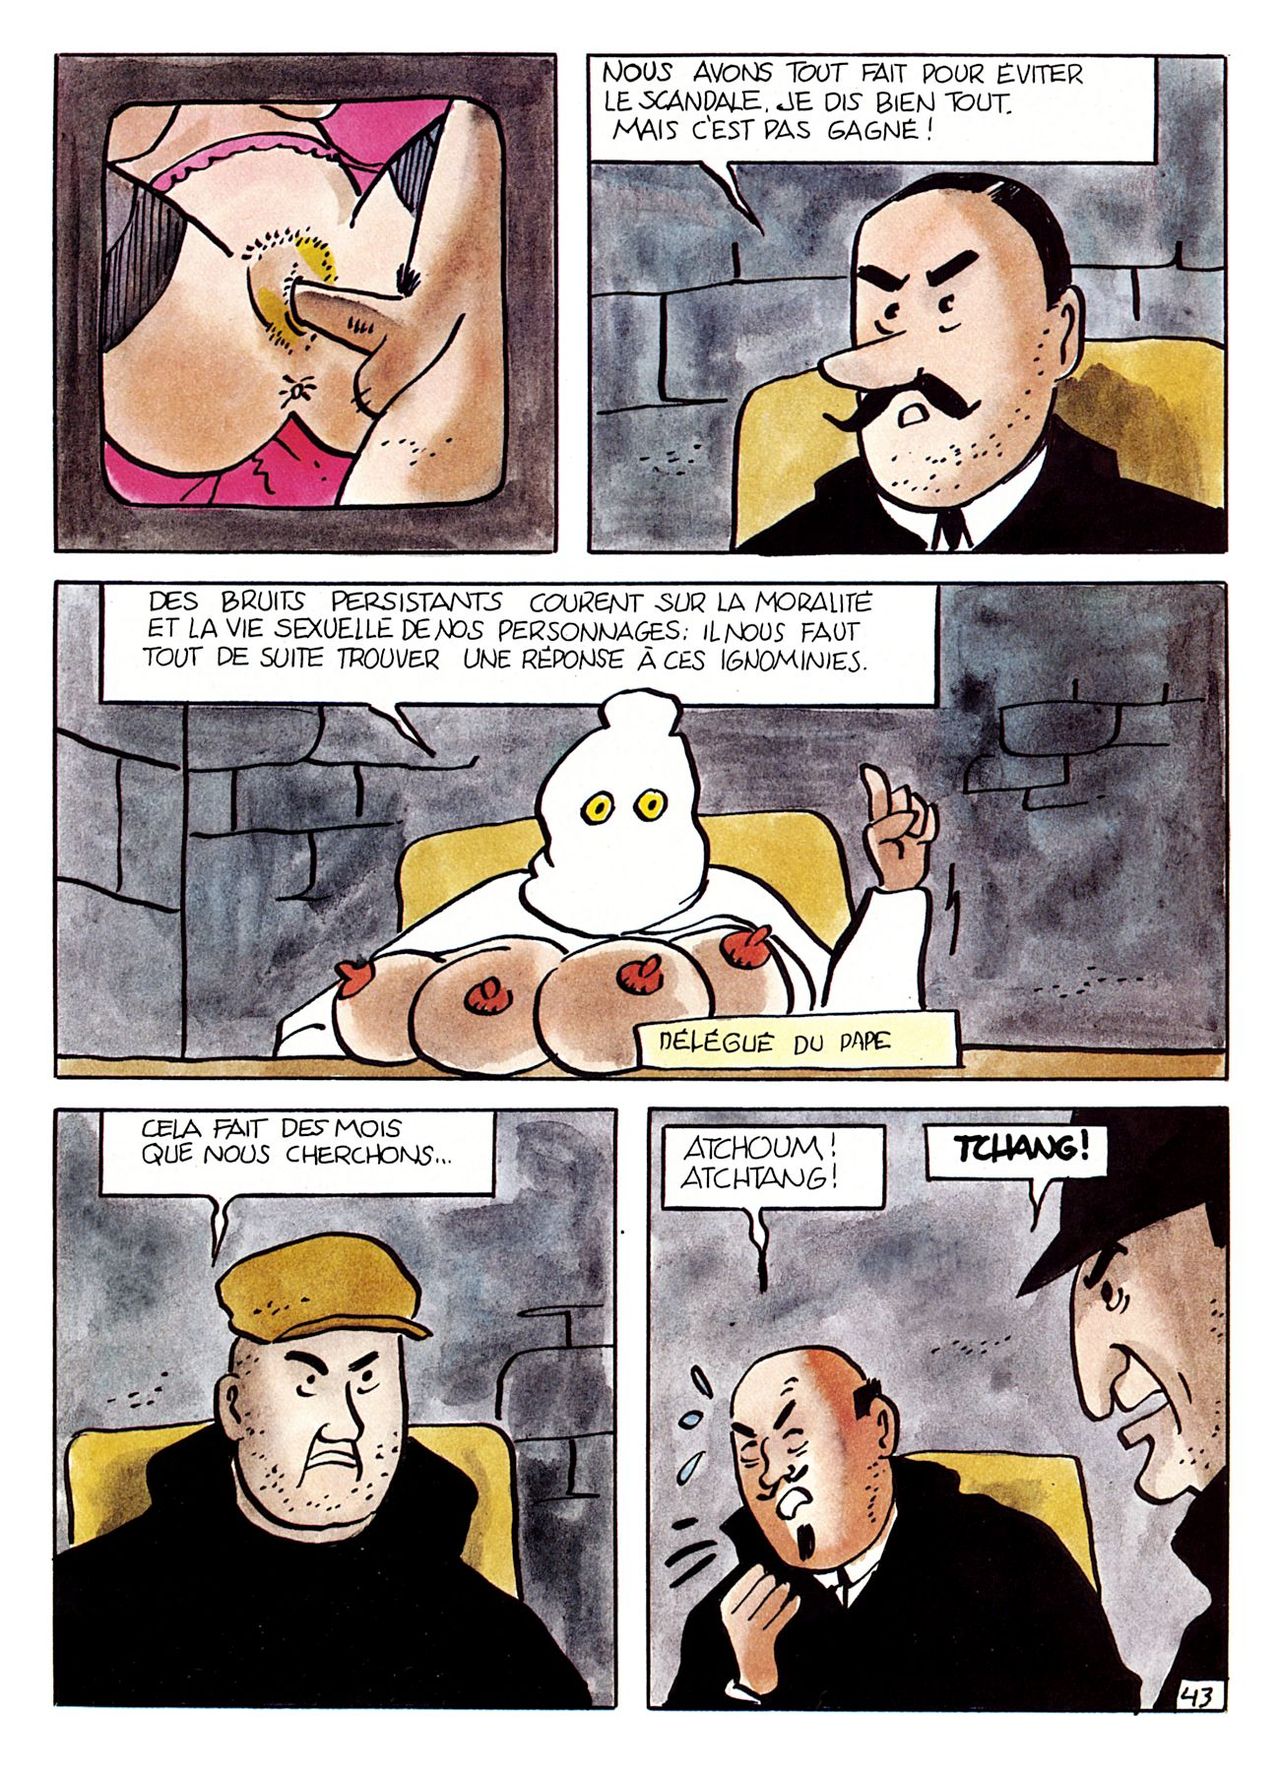 La Vie Sexuelle De Tintin numero d'image 46